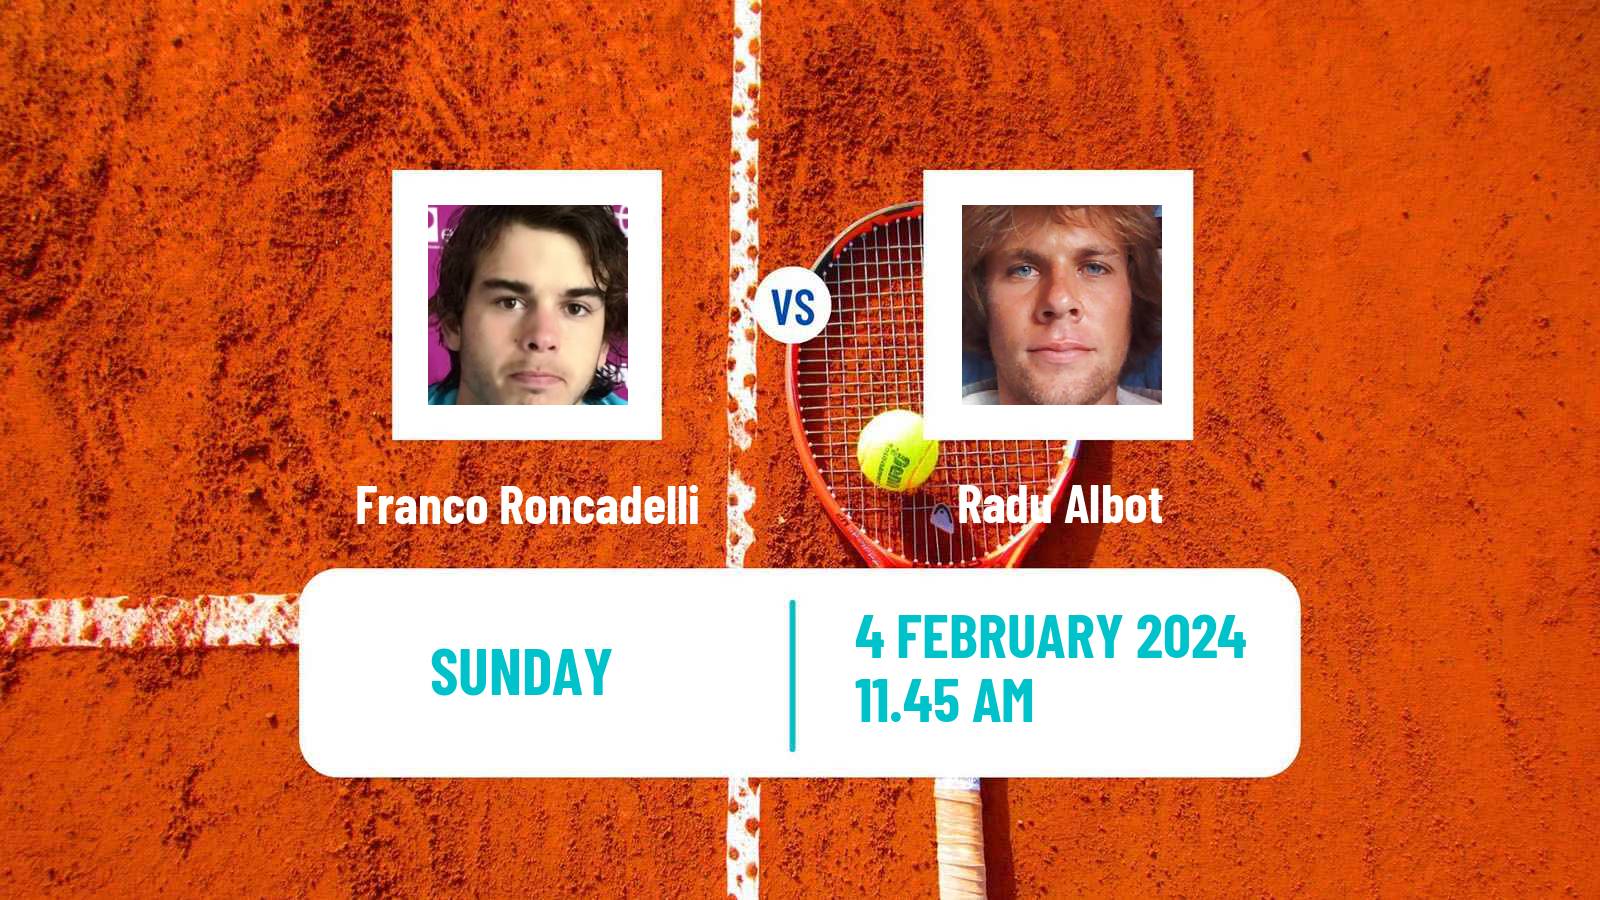 Tennis Davis Cup World Group II Franco Roncadelli - Radu Albot